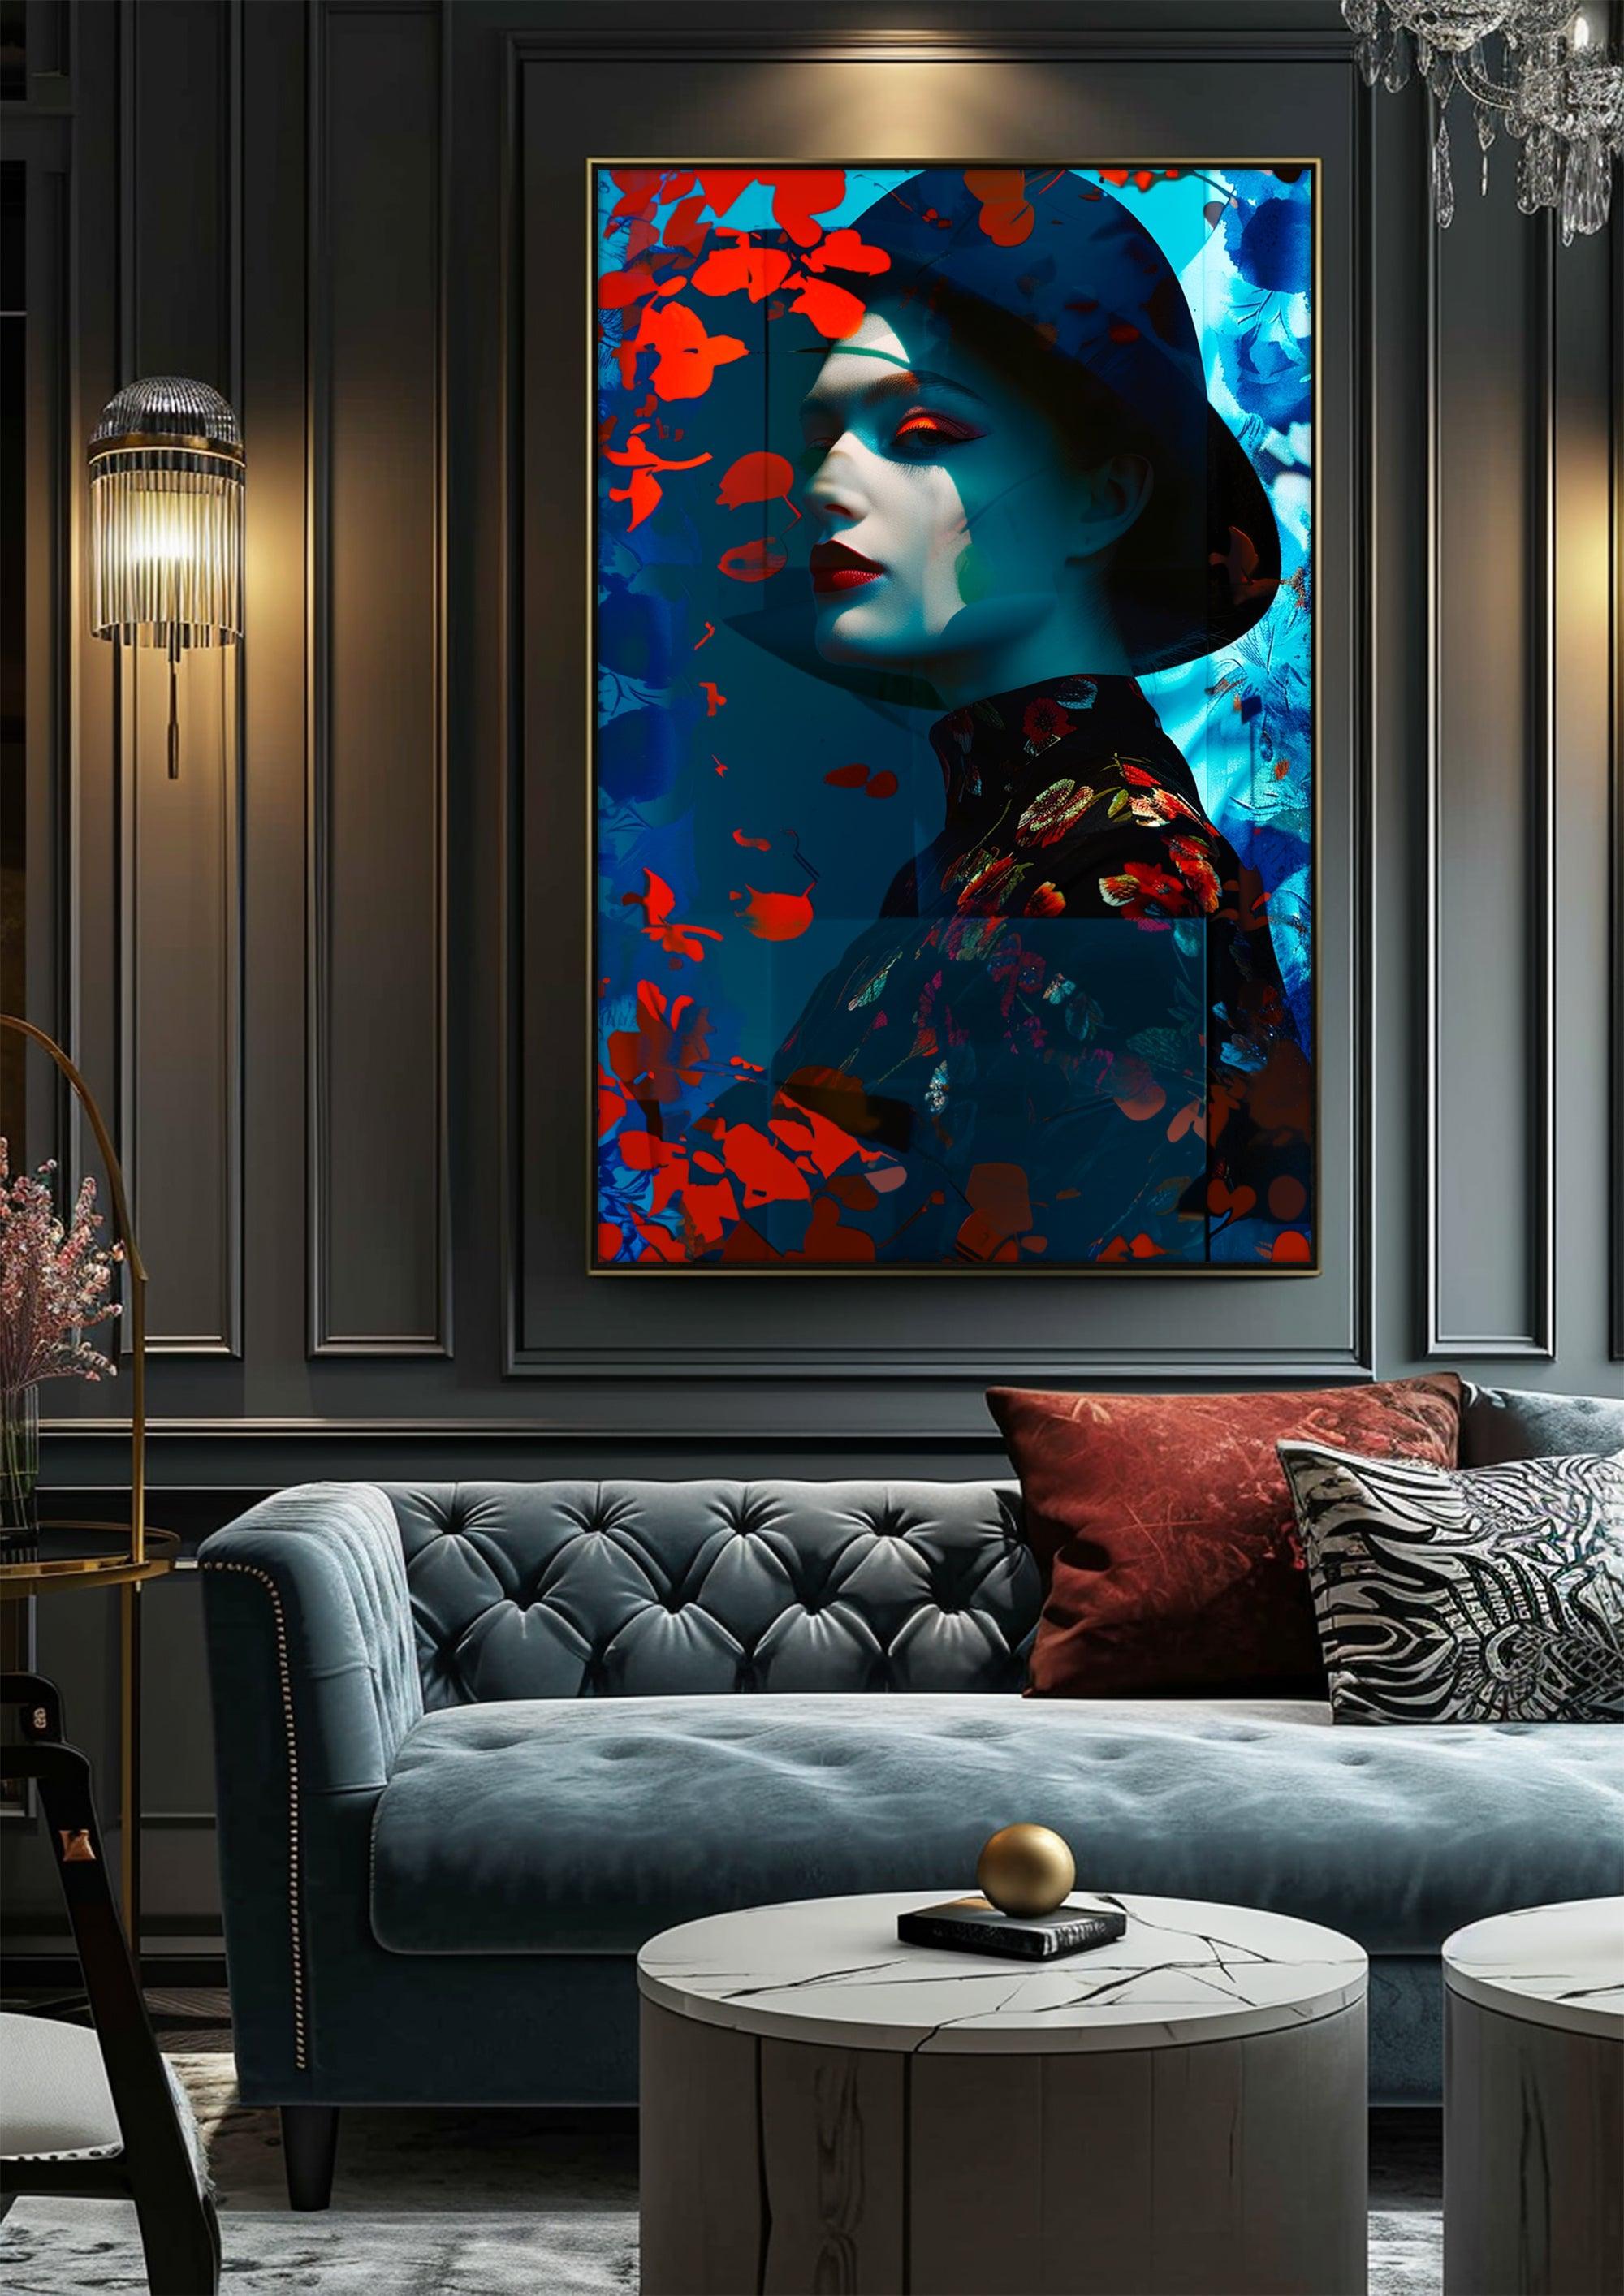 Fashion Poster| Fashion Wall Art Decor |Gallery-quality art prints|Advanced Poster Design|bedroom livingroom,Hotel Decoration|PRINTABLE Art |Digital Download